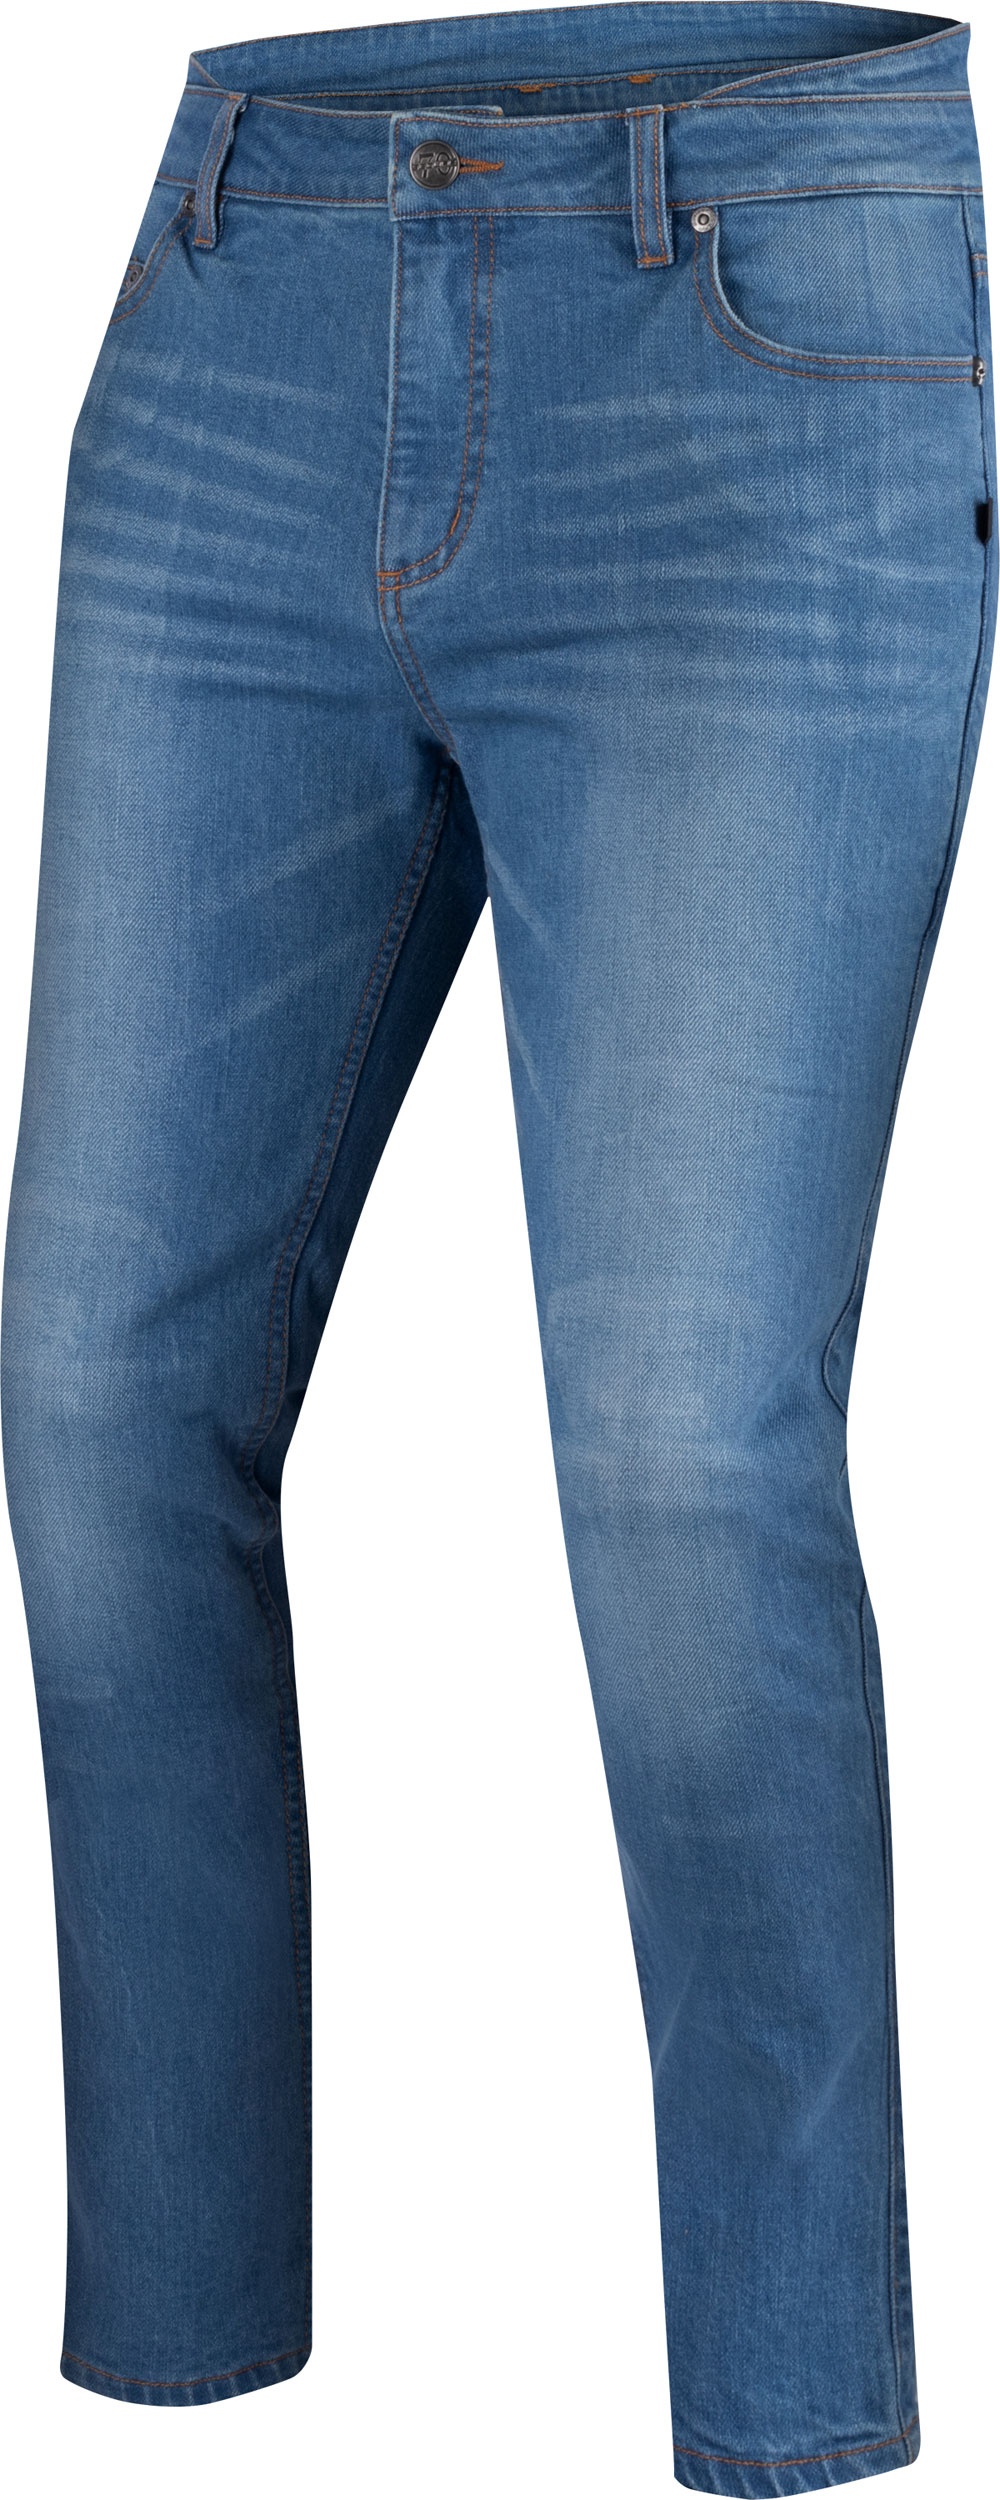 Segura Rosco, jeans - Bleu - 3XL